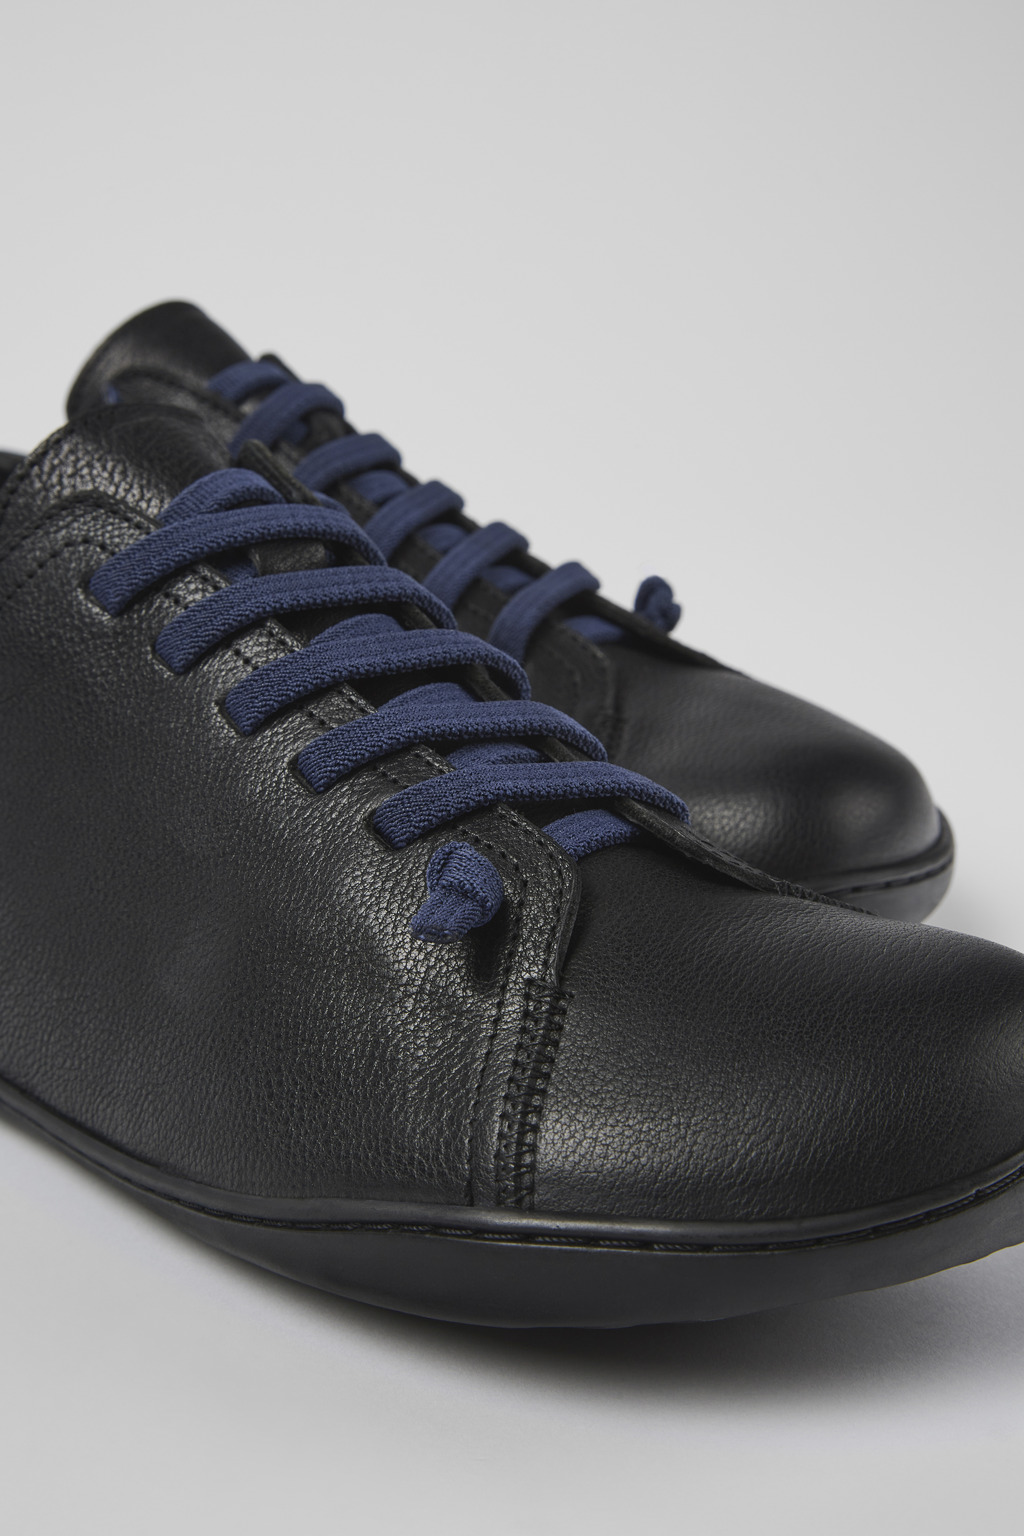 Buy Camper, 17665 Peu Cami Men's Sneaker, black-blue » at MBaetz online